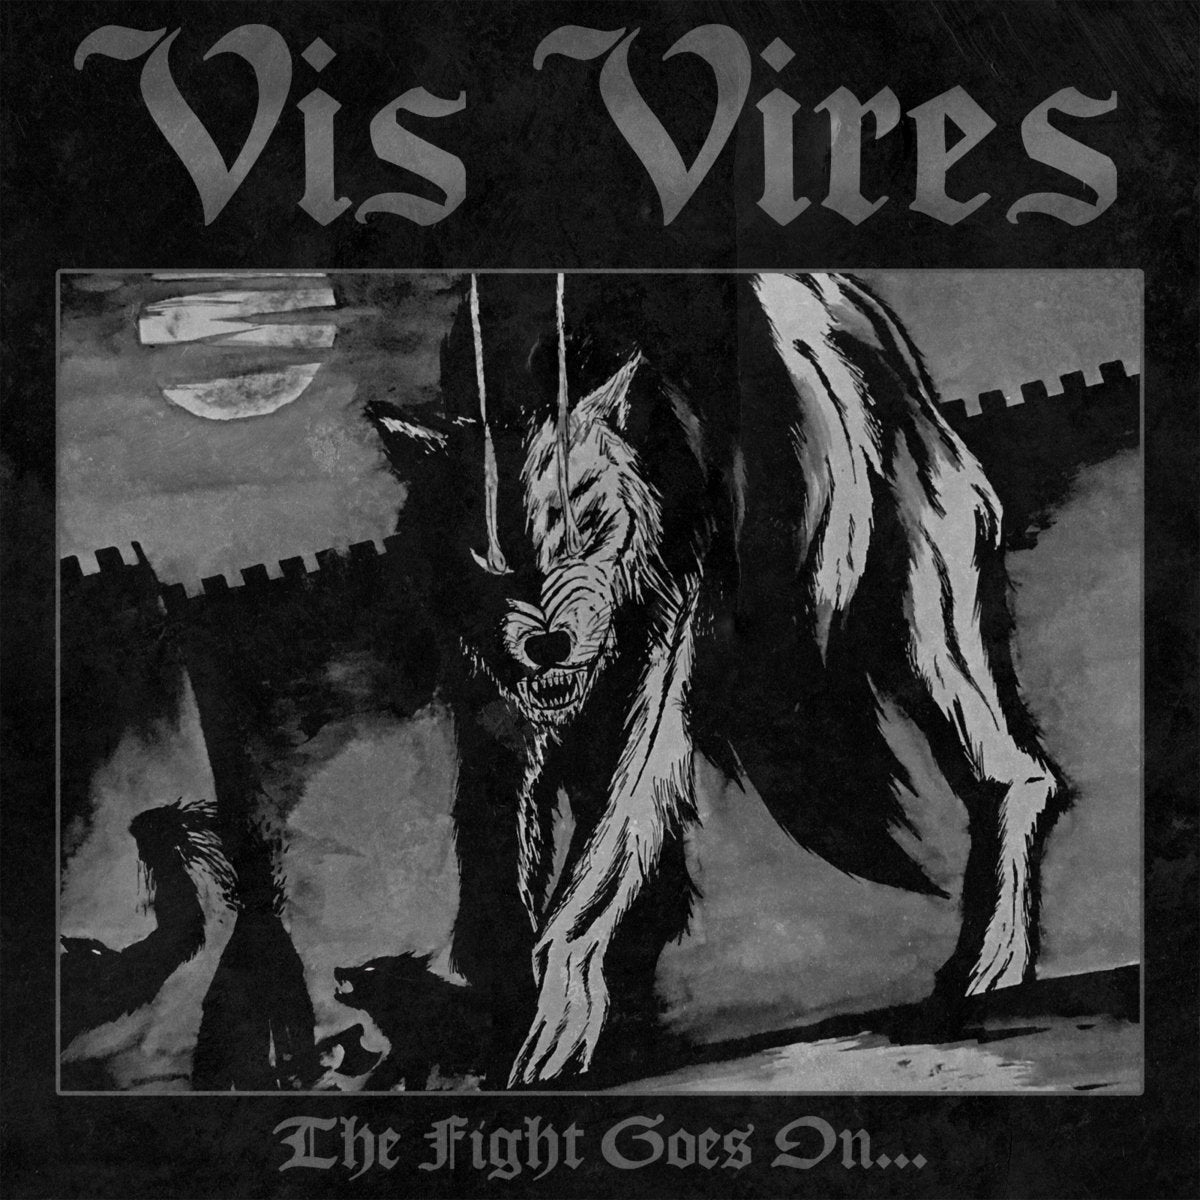 VIS VIRES - THE FIGHT GOES ON Vinyl LP